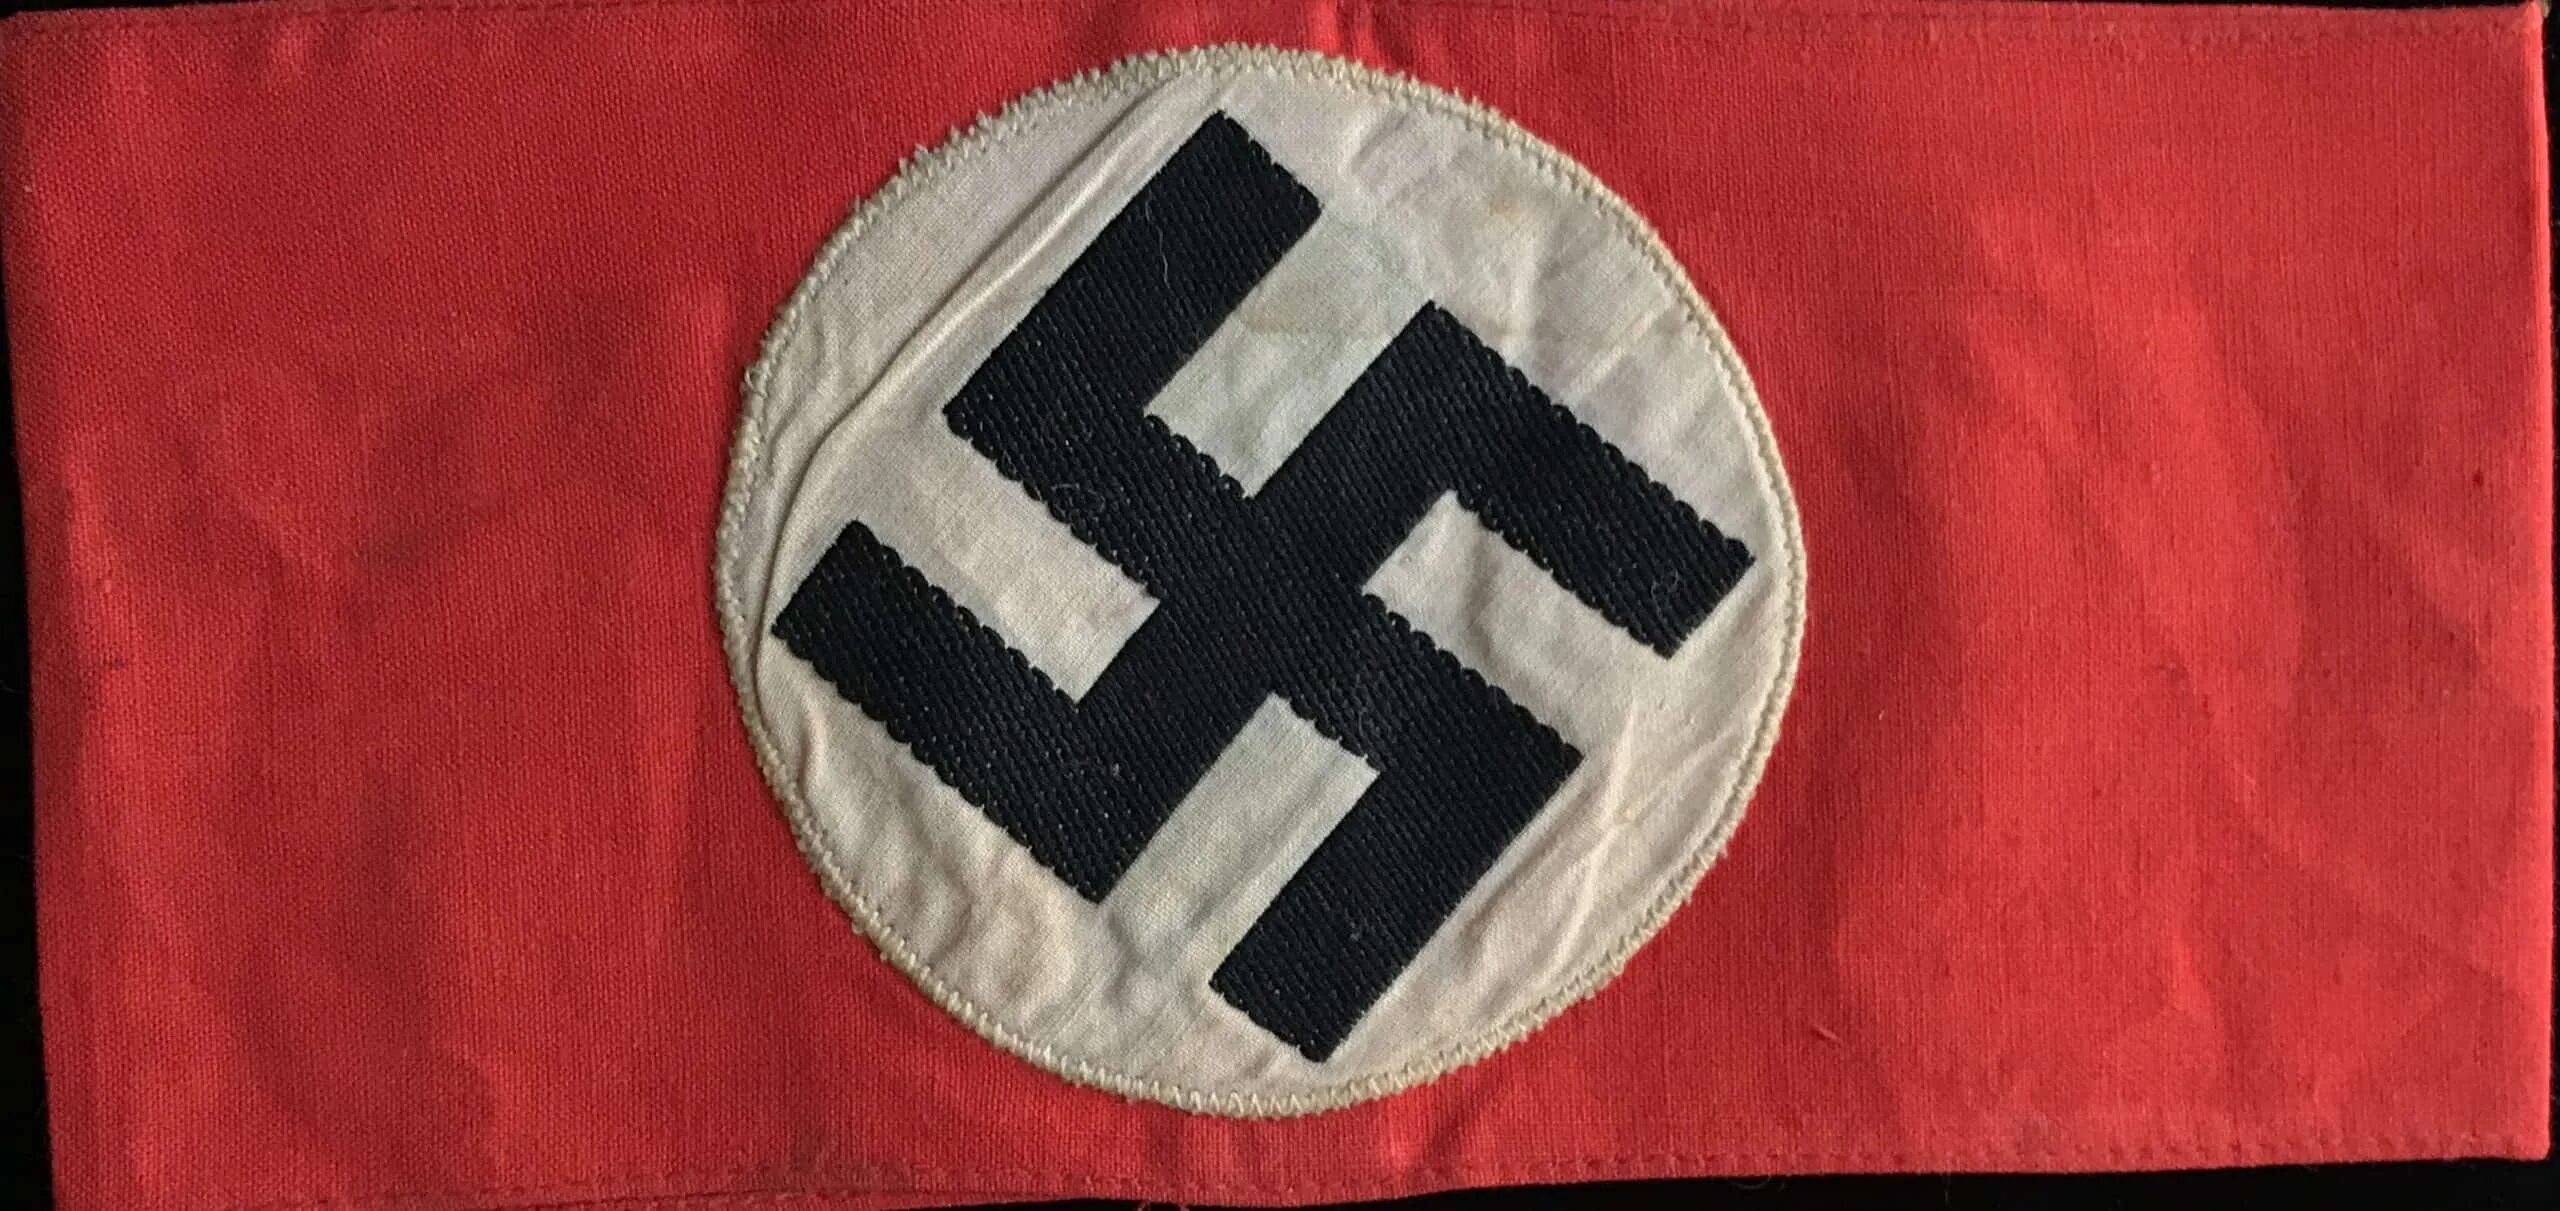 Мм в сс. Повязка НСДАП. Нарукавная повязка НСДАП. Waffen SS повязка. Нарукавная повязка Альгемайне-СС.